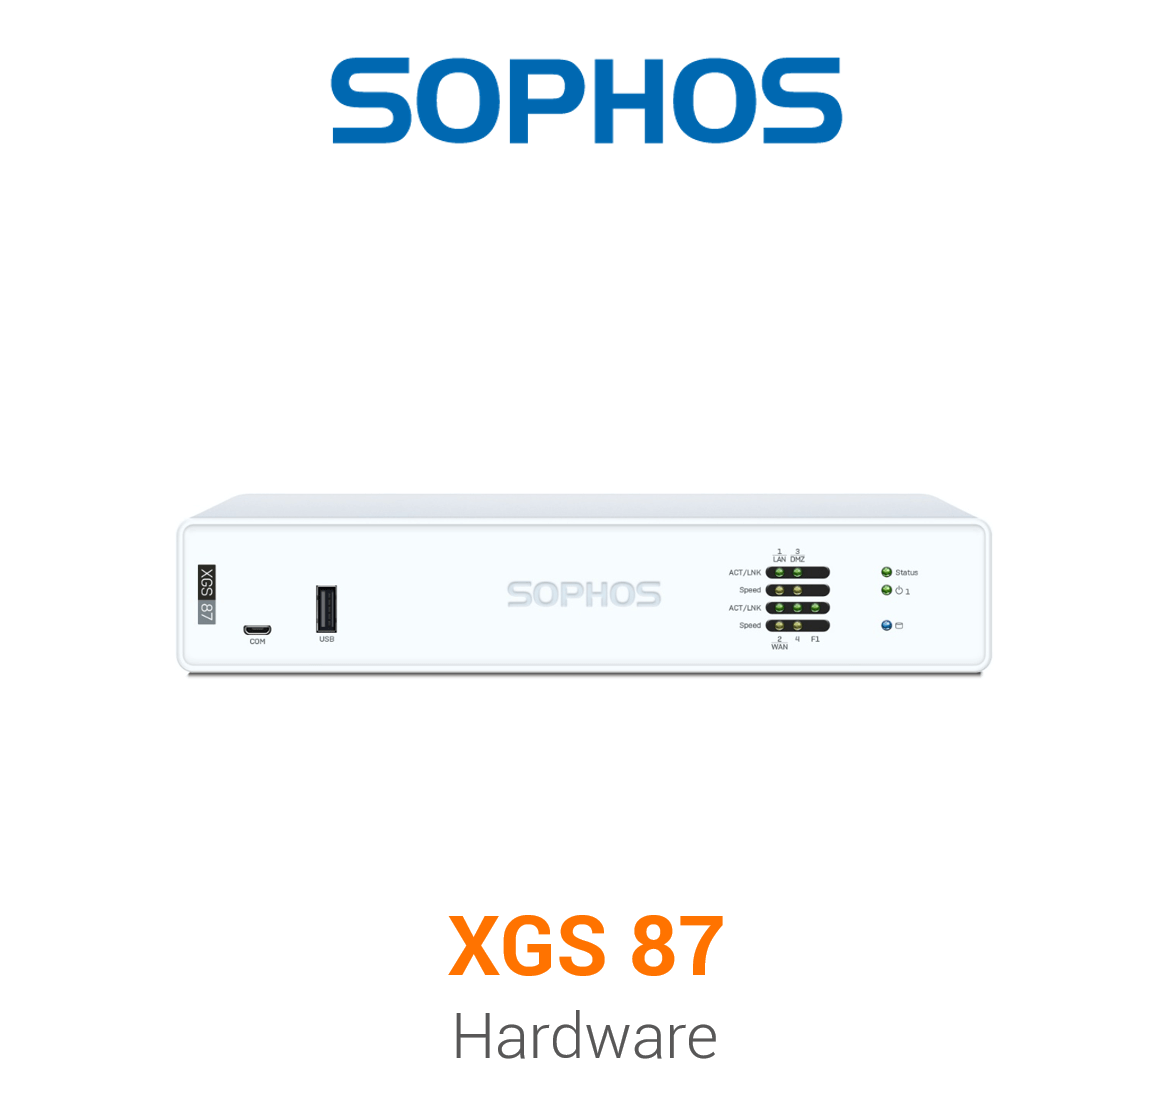 Sophos XGS 87 Security Appliance